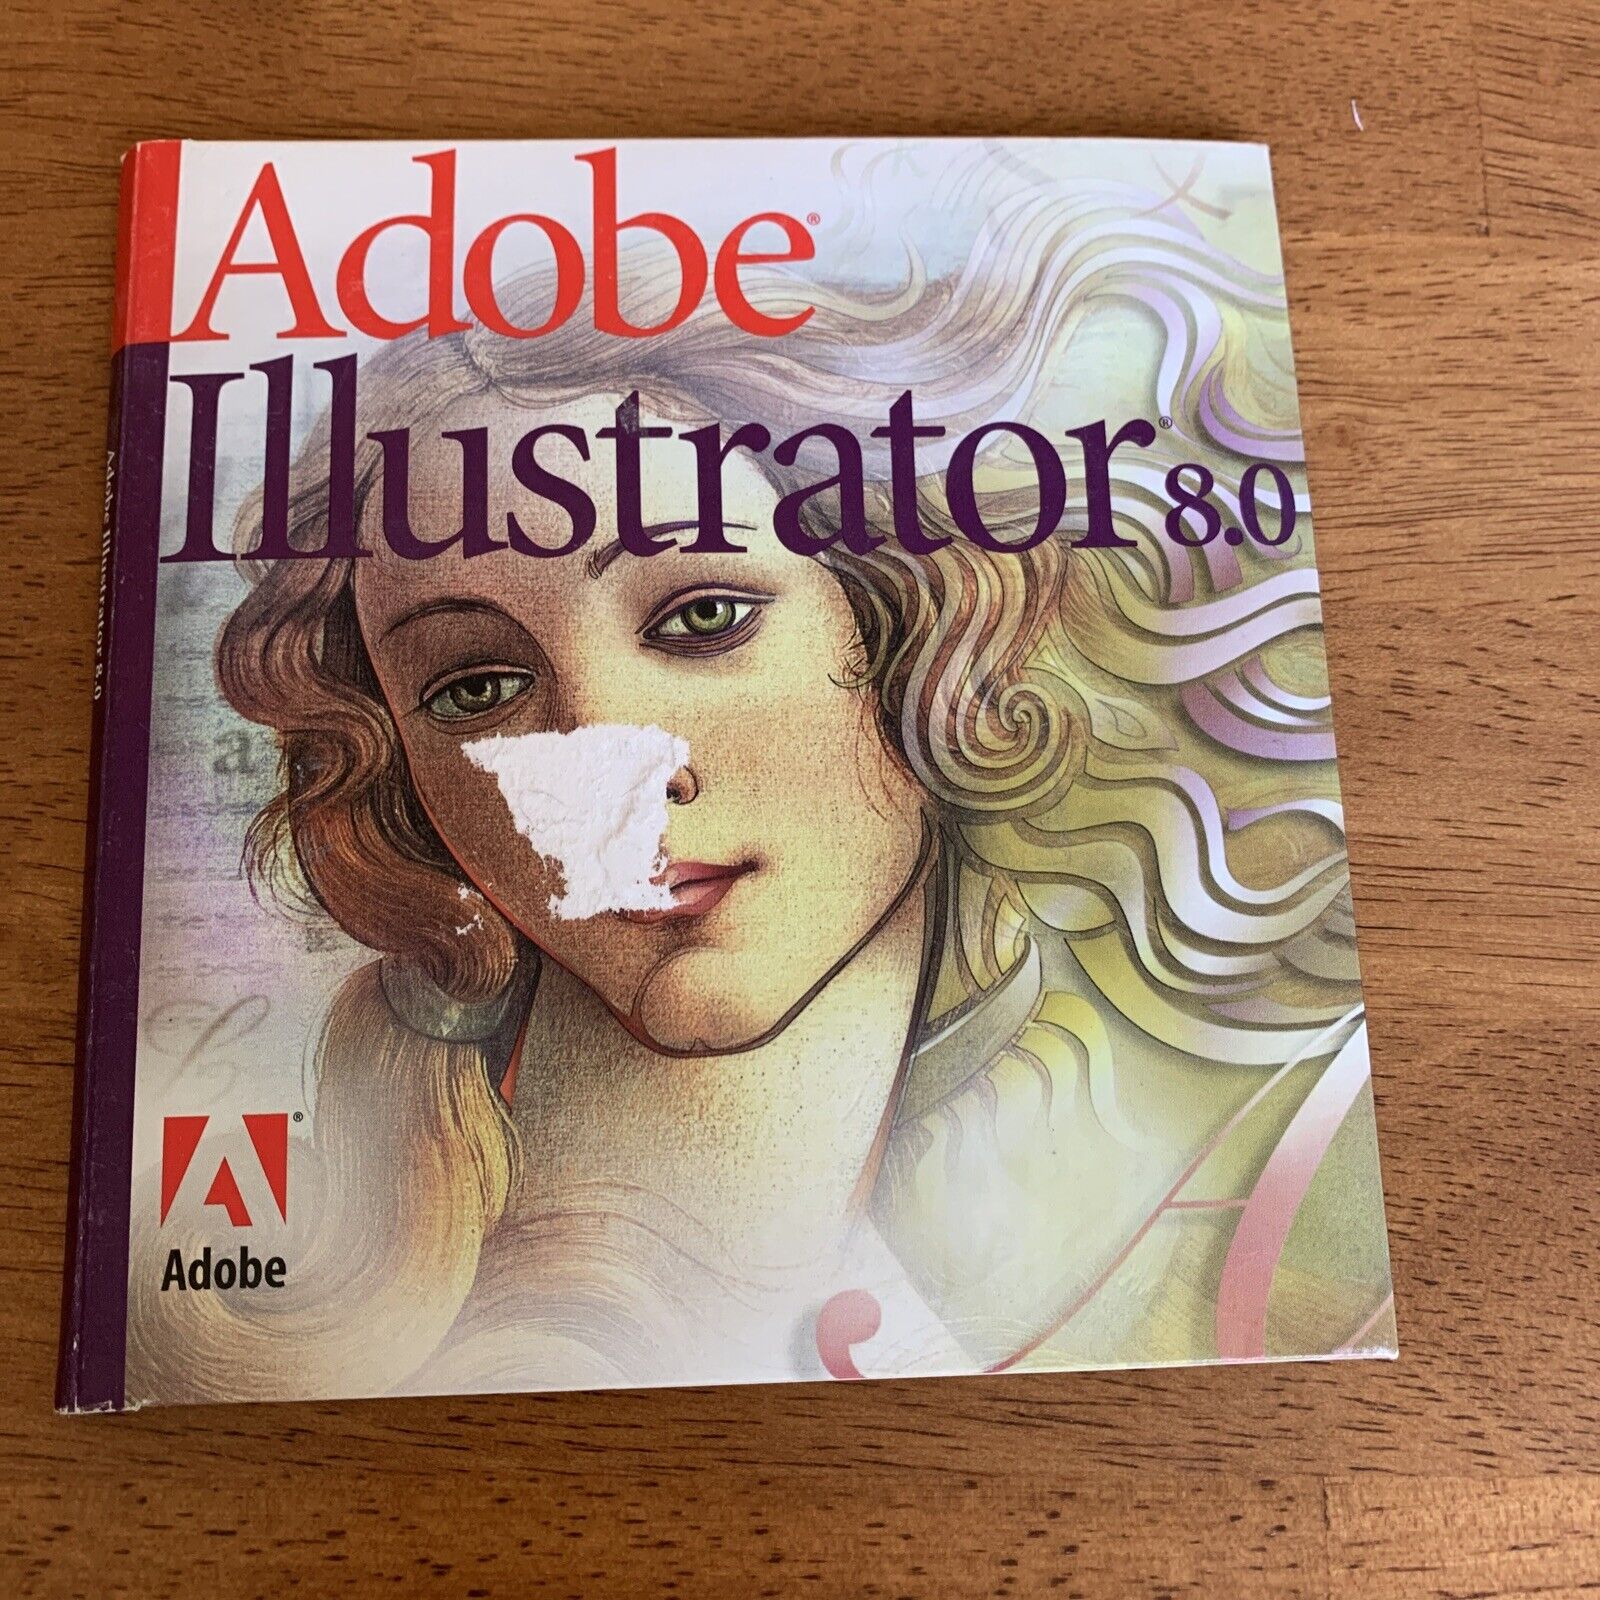 Adobe Illustrator 8.0 for Mac Macintosh Apple Full Retail Version Original Media